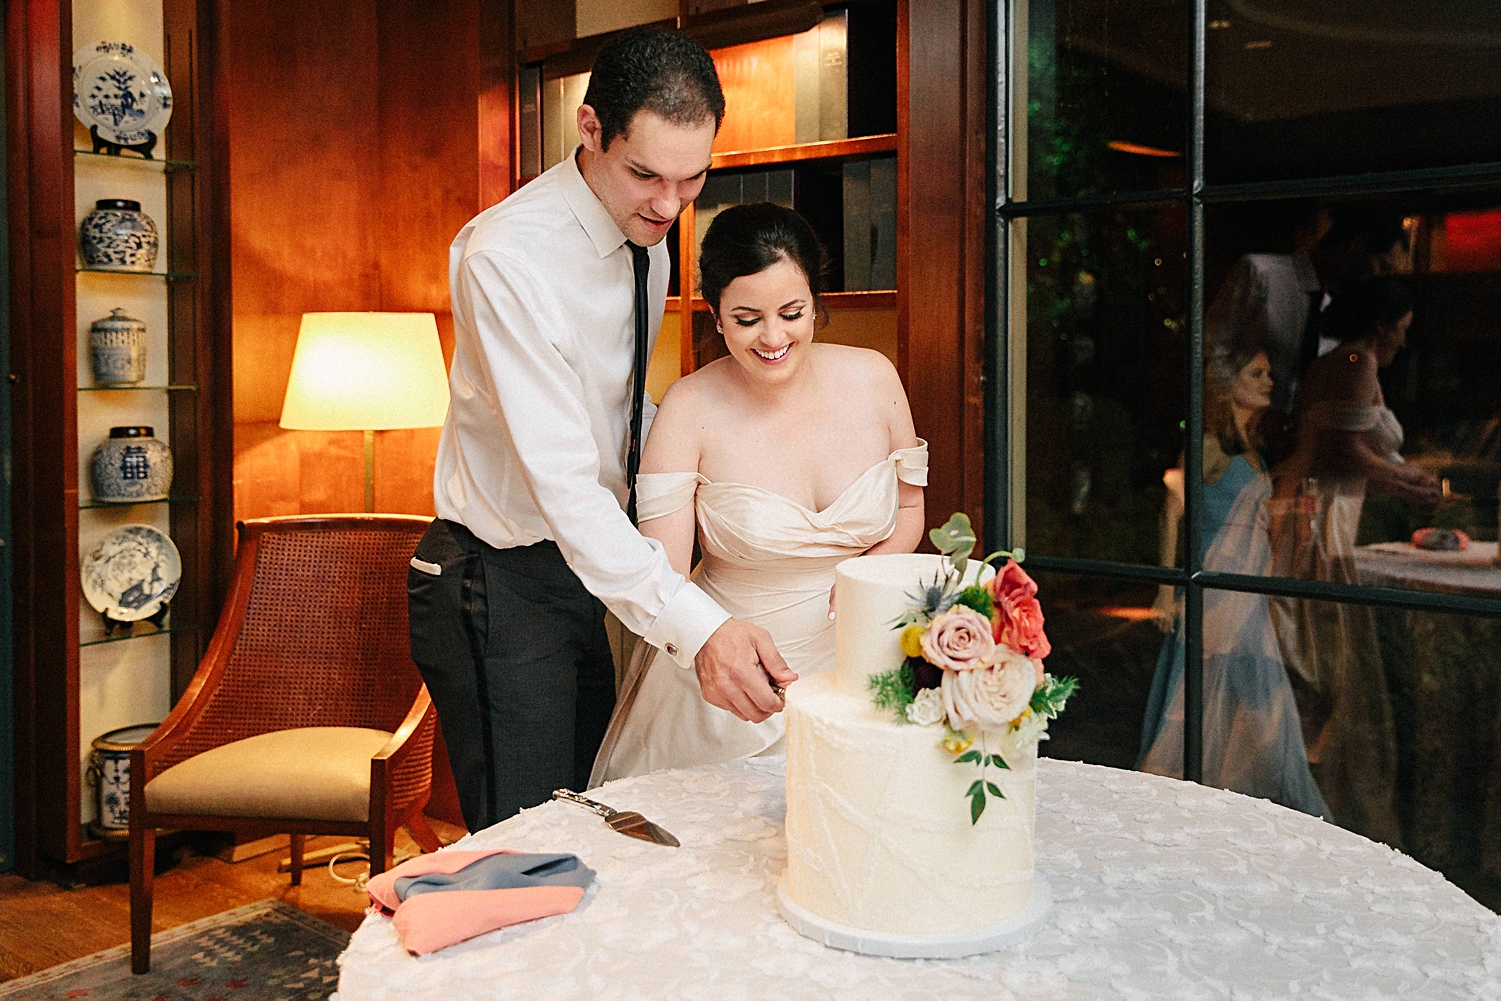 bride and groom cutting cake wedding reception